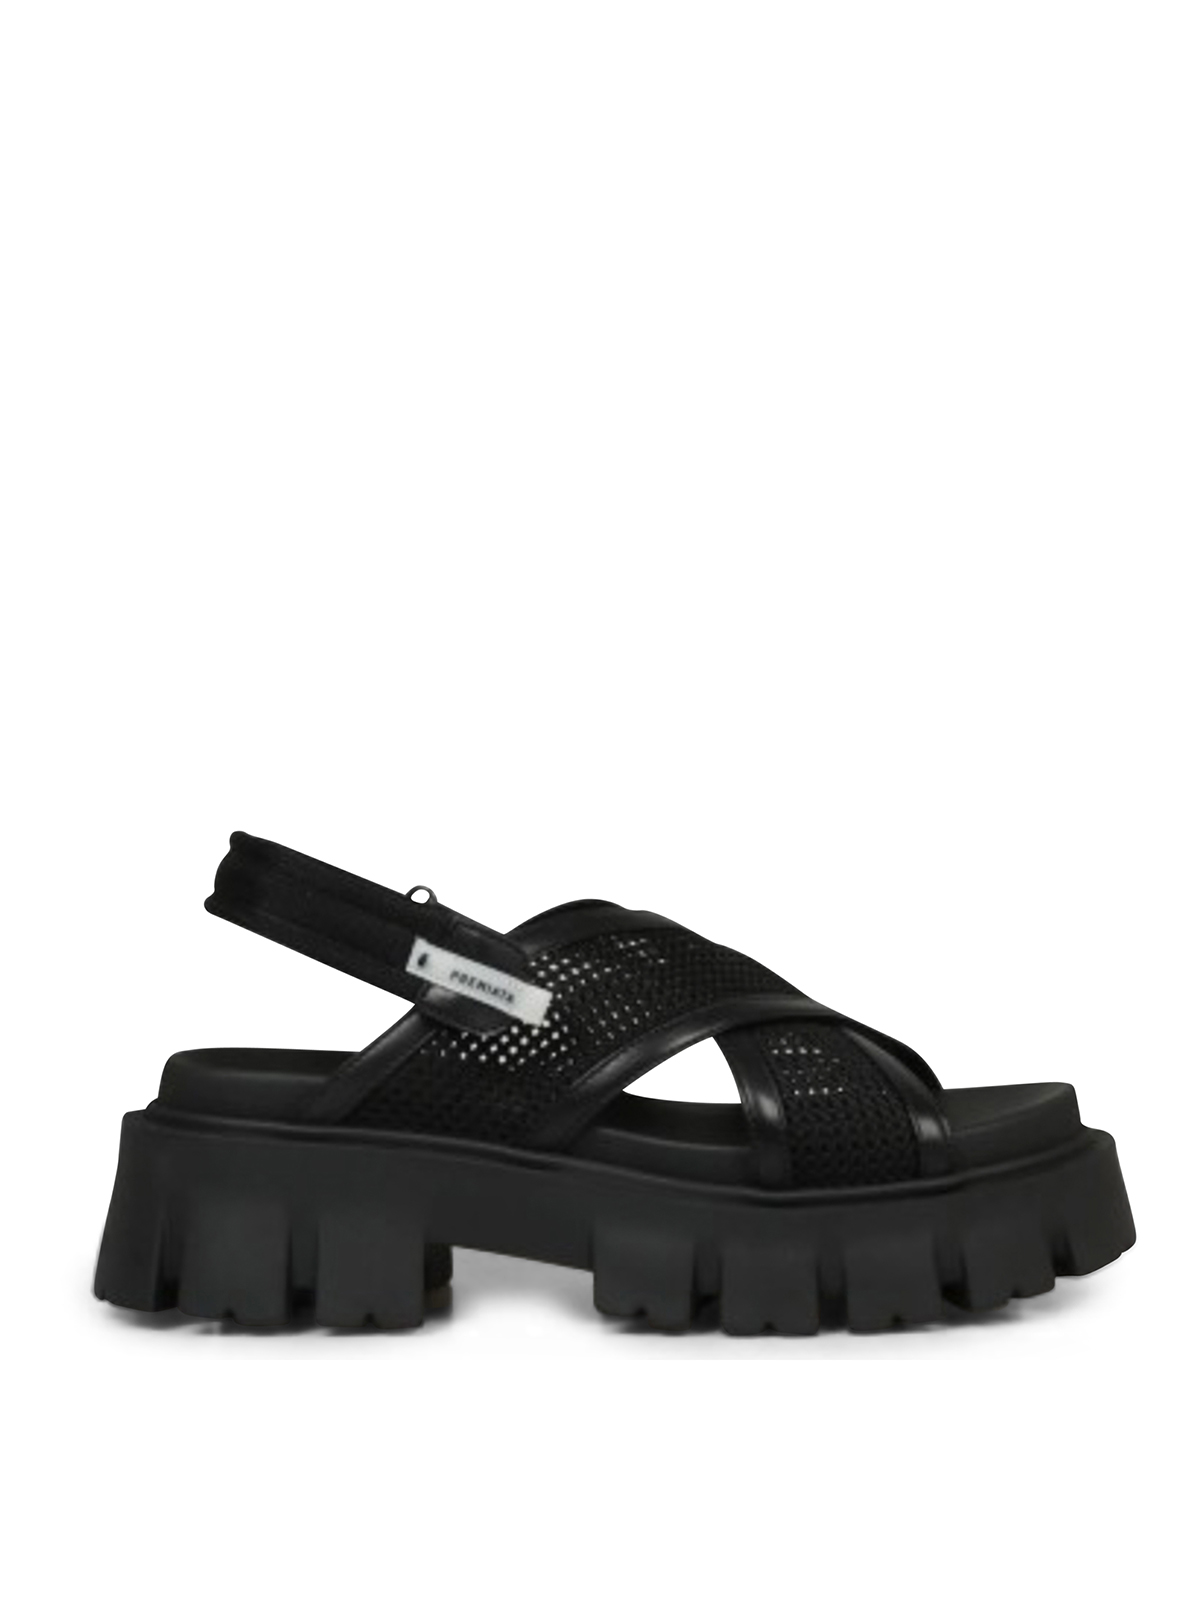 Sandals Premiata - M6288 sandals - M6288BNERO | Shop online at iKRIX